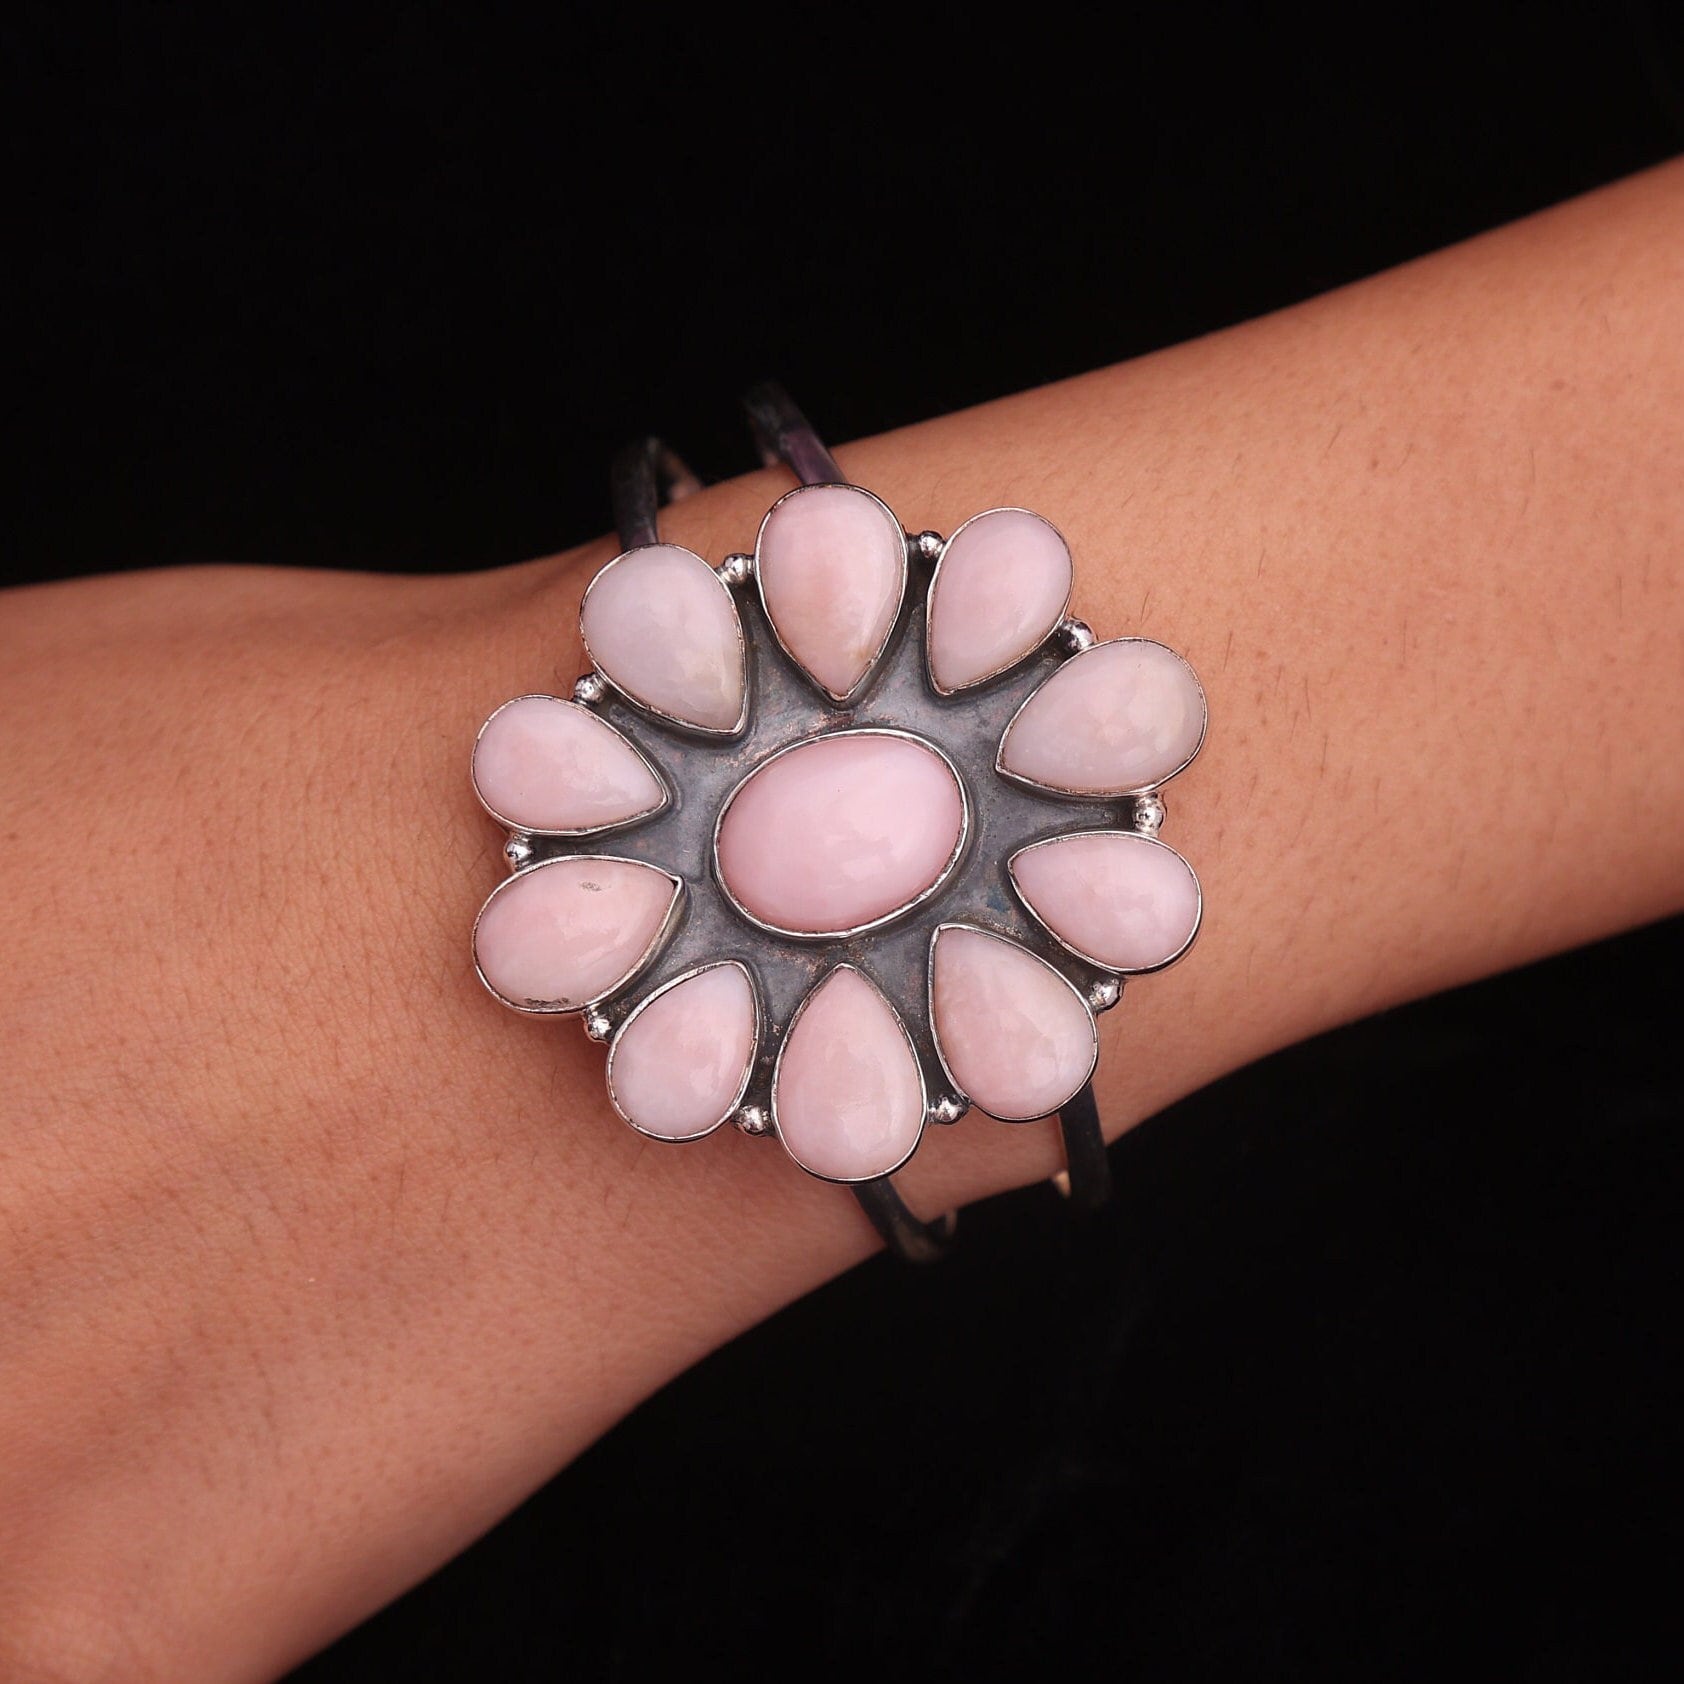 Pink Opal Bracelet, 925 Sterling Silver Bracelet, October Birthstone Bracelet, Flower Shape Bracelet, Statement Jewelry, Adjustable Bracelet